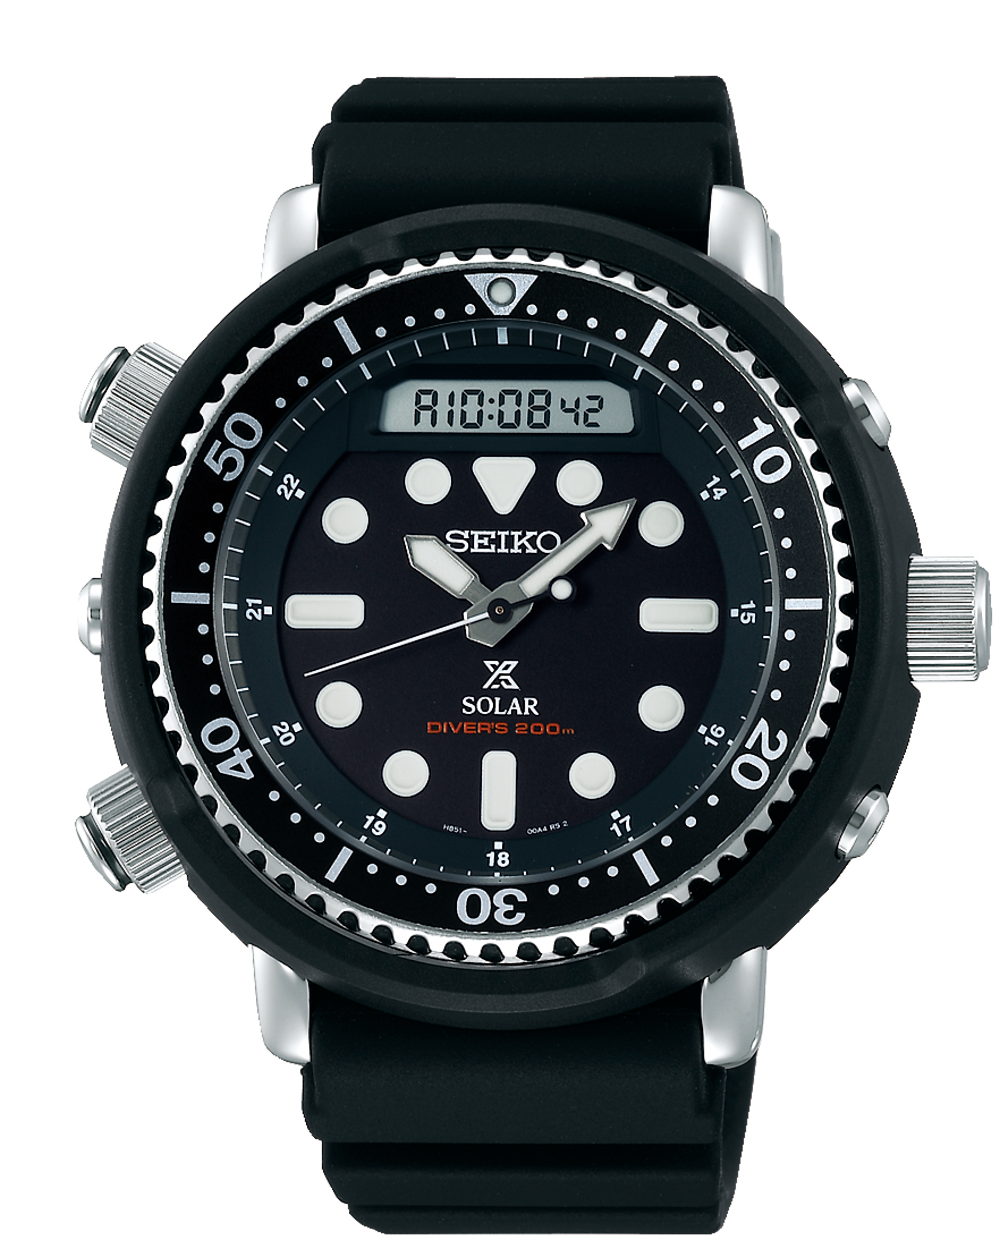 Seiko Prospex Solar Diver's Watch in Black | Angus & Coote